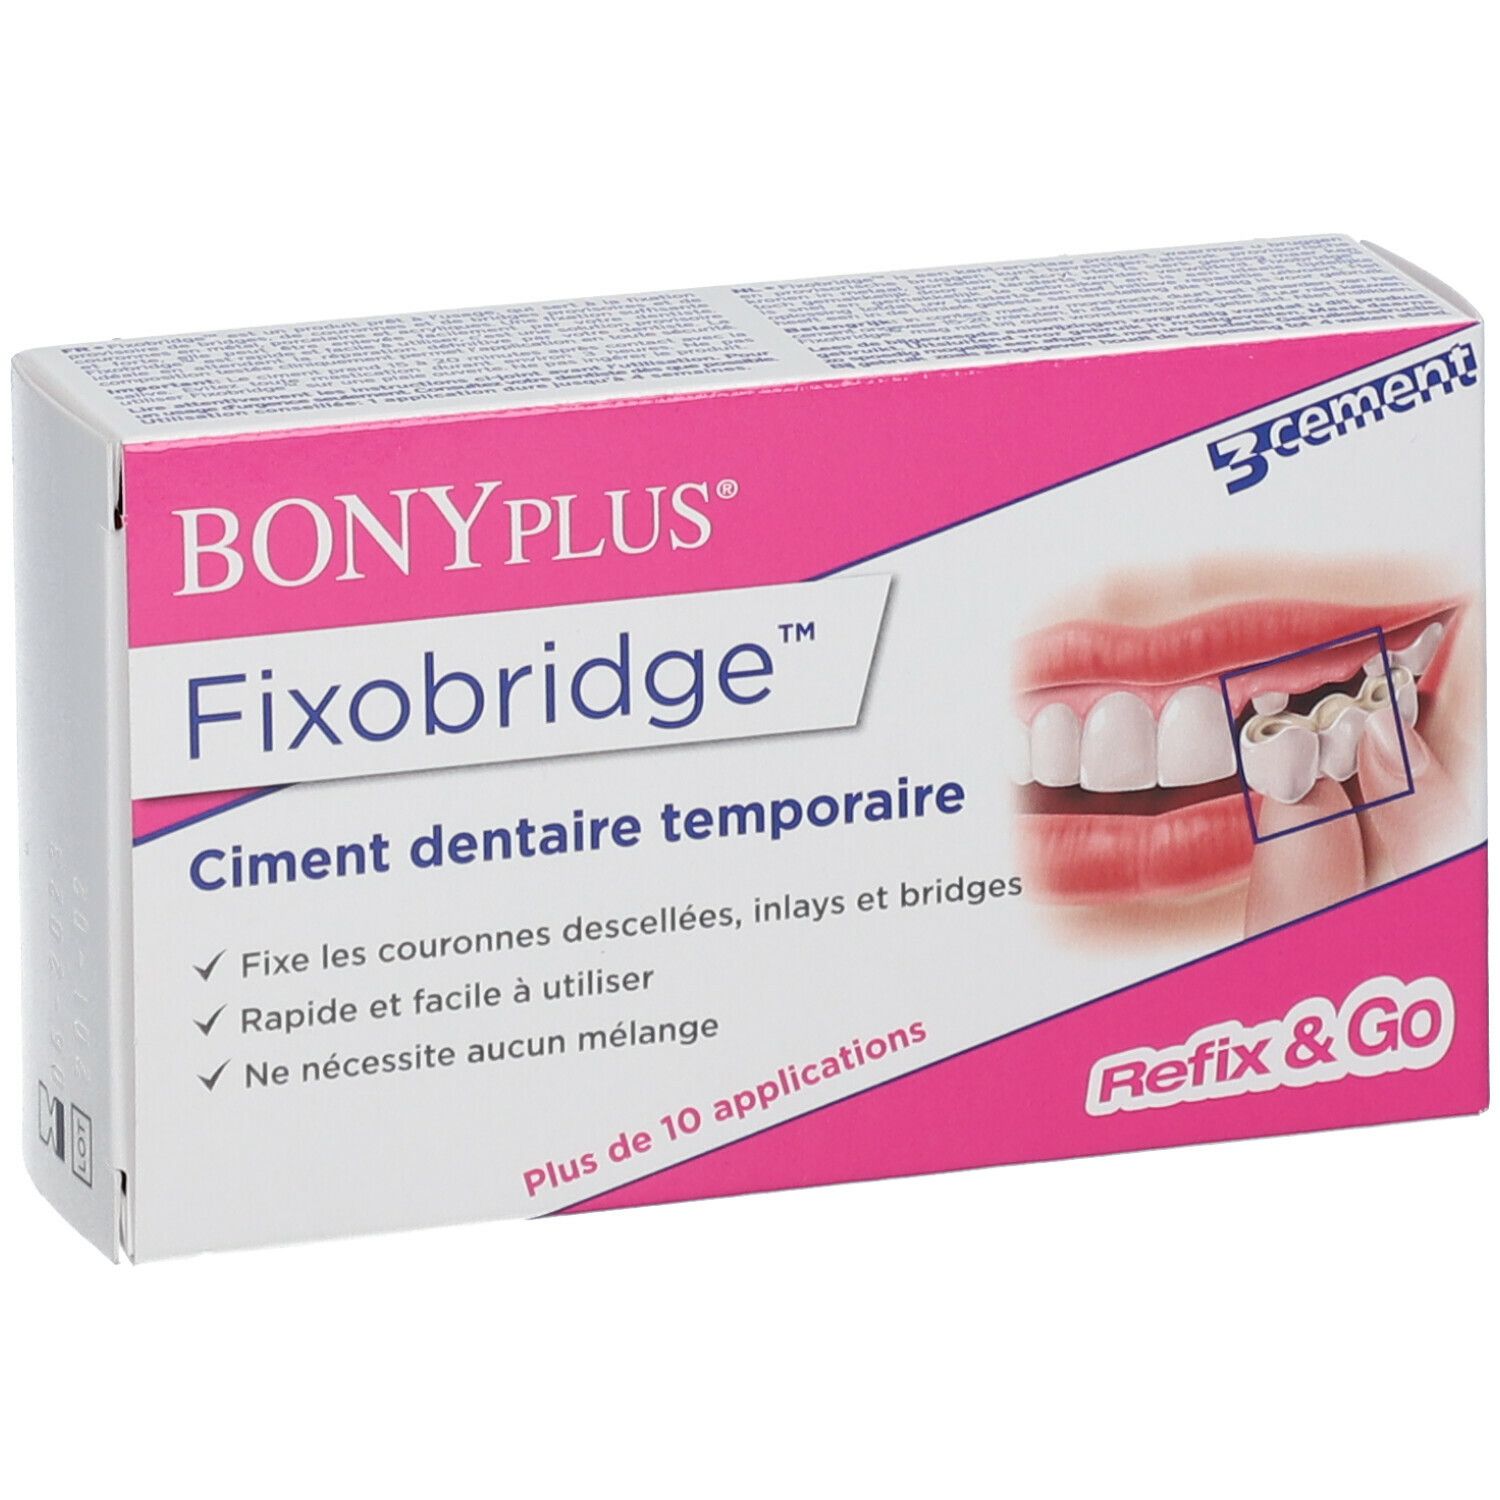 BONYplus® Fixobridge